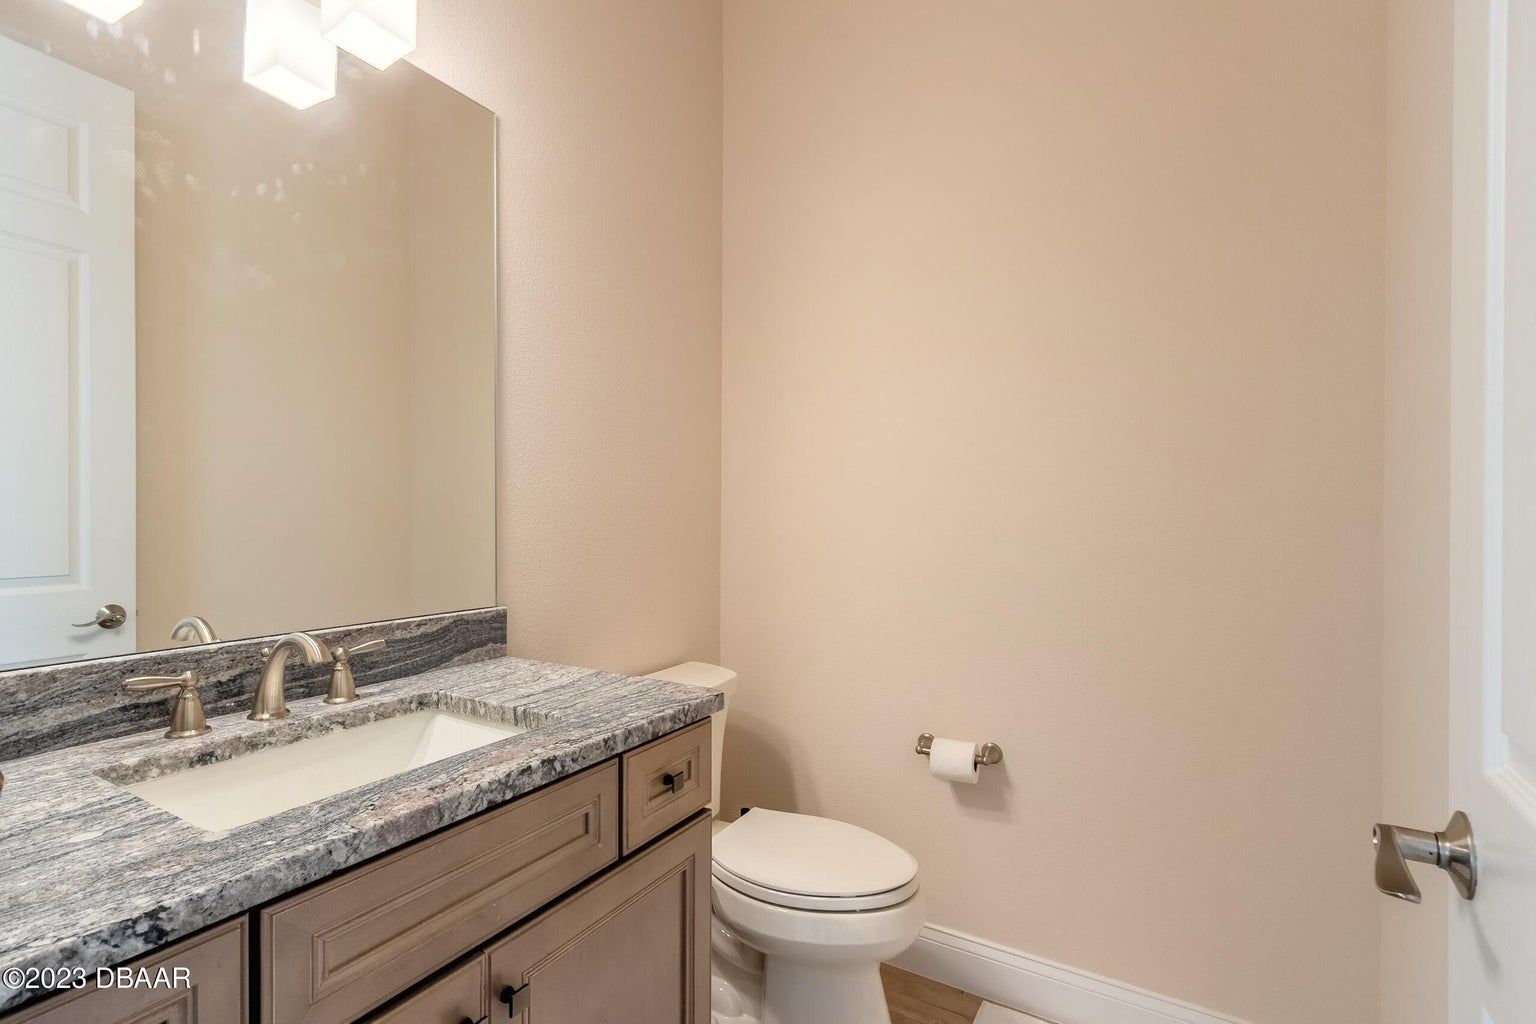 Bathroom with beige walls